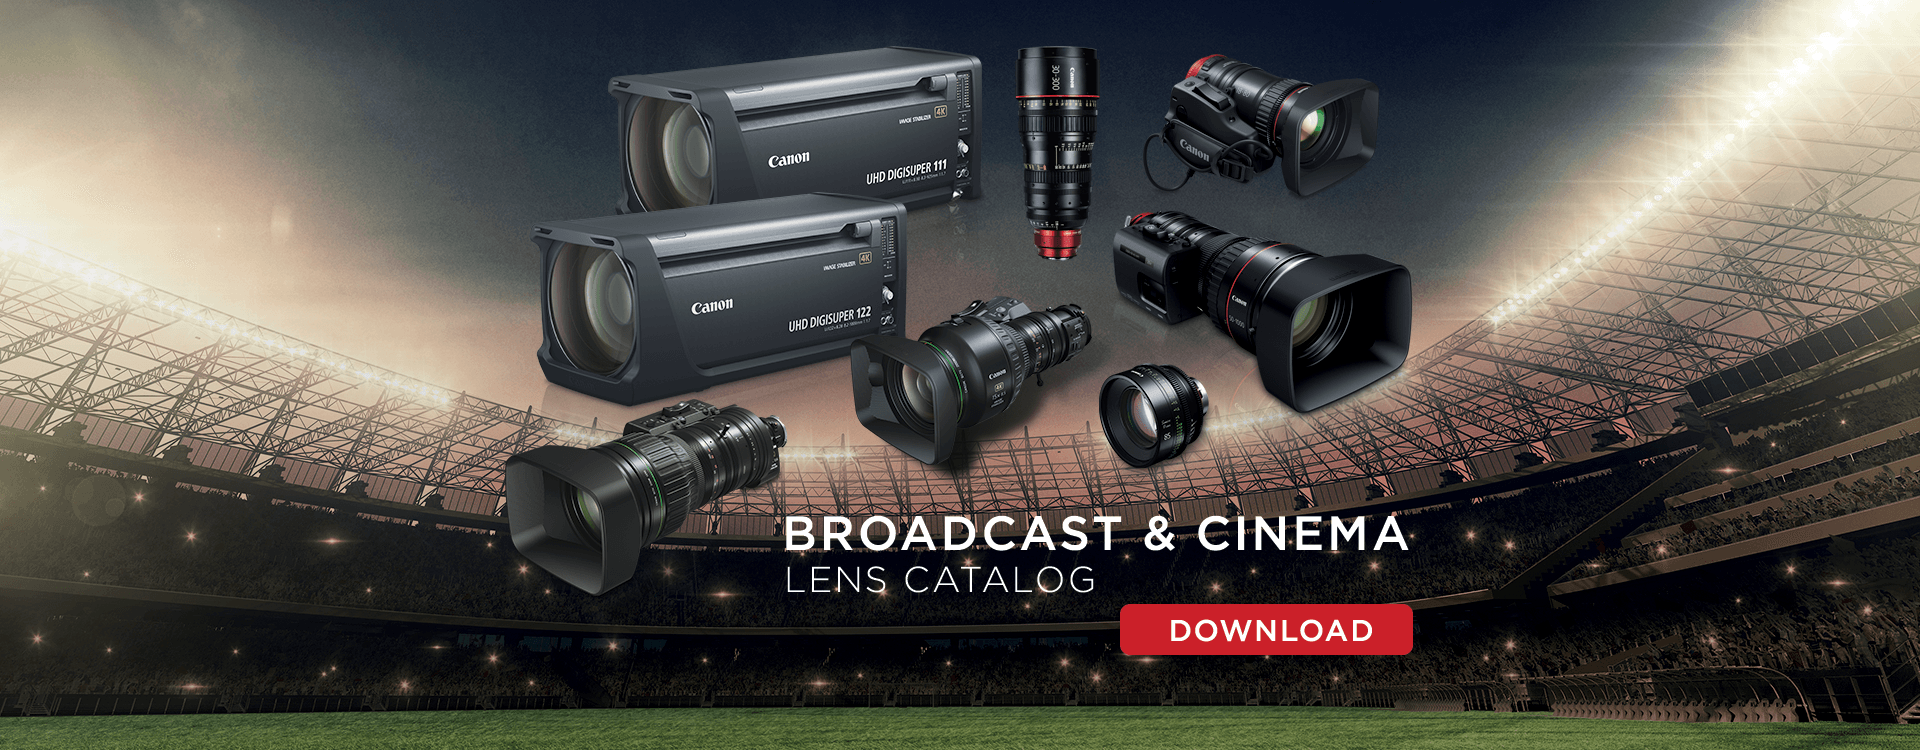 Broadcast & Cinema Lens Catalog